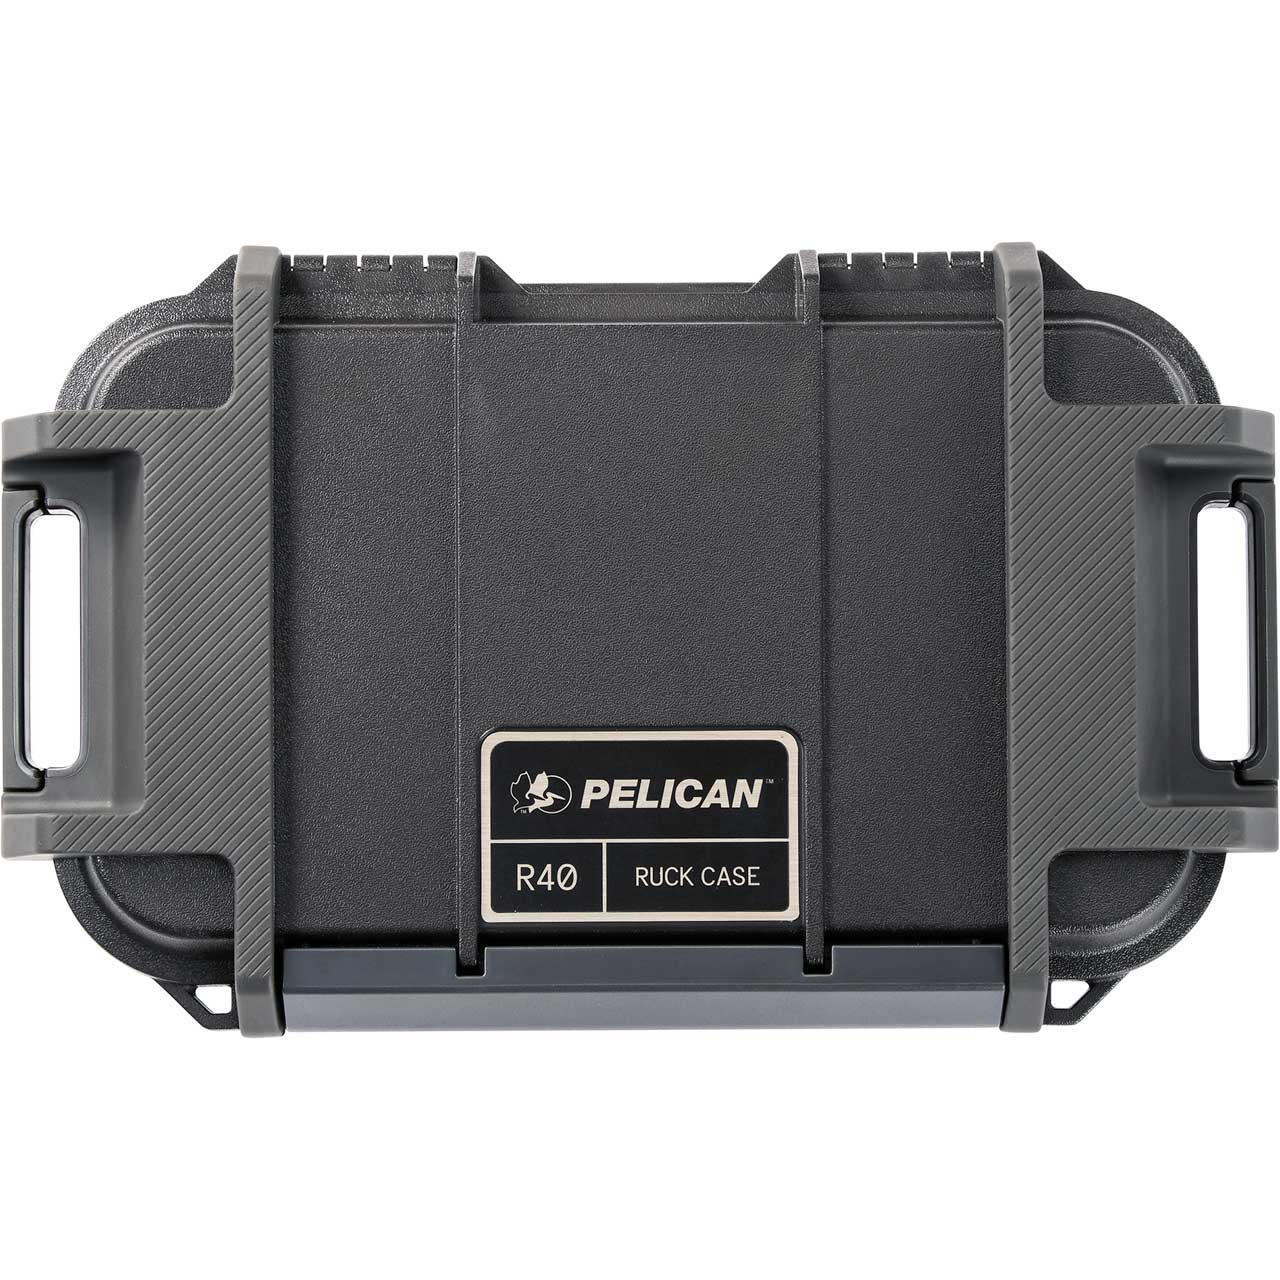 Pelican R40 Personal Utility Ruck Case - Black